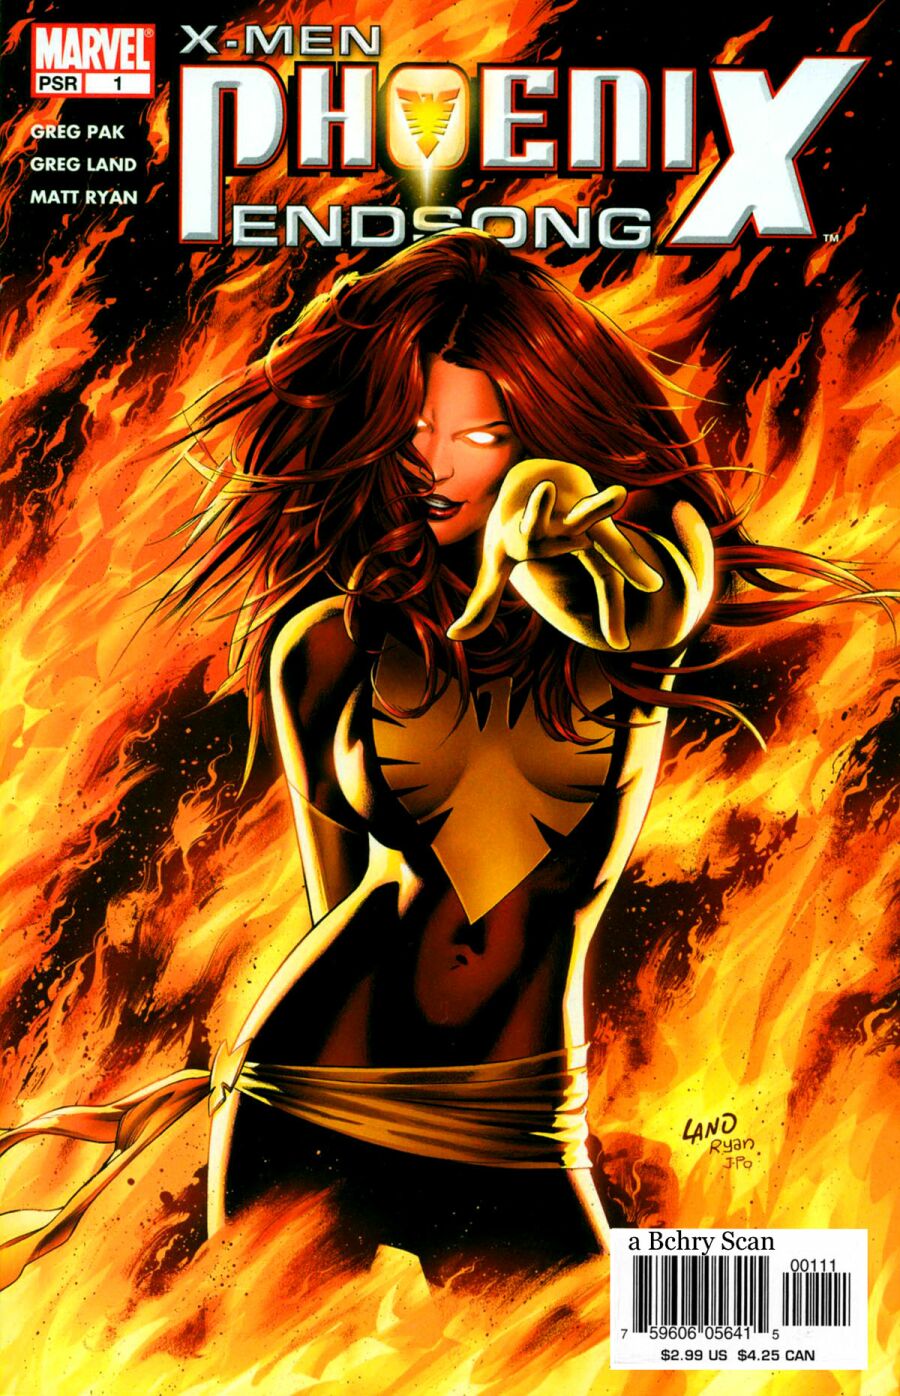 X-Men: Phoenix - Endsong Greg Pak and Greg Land